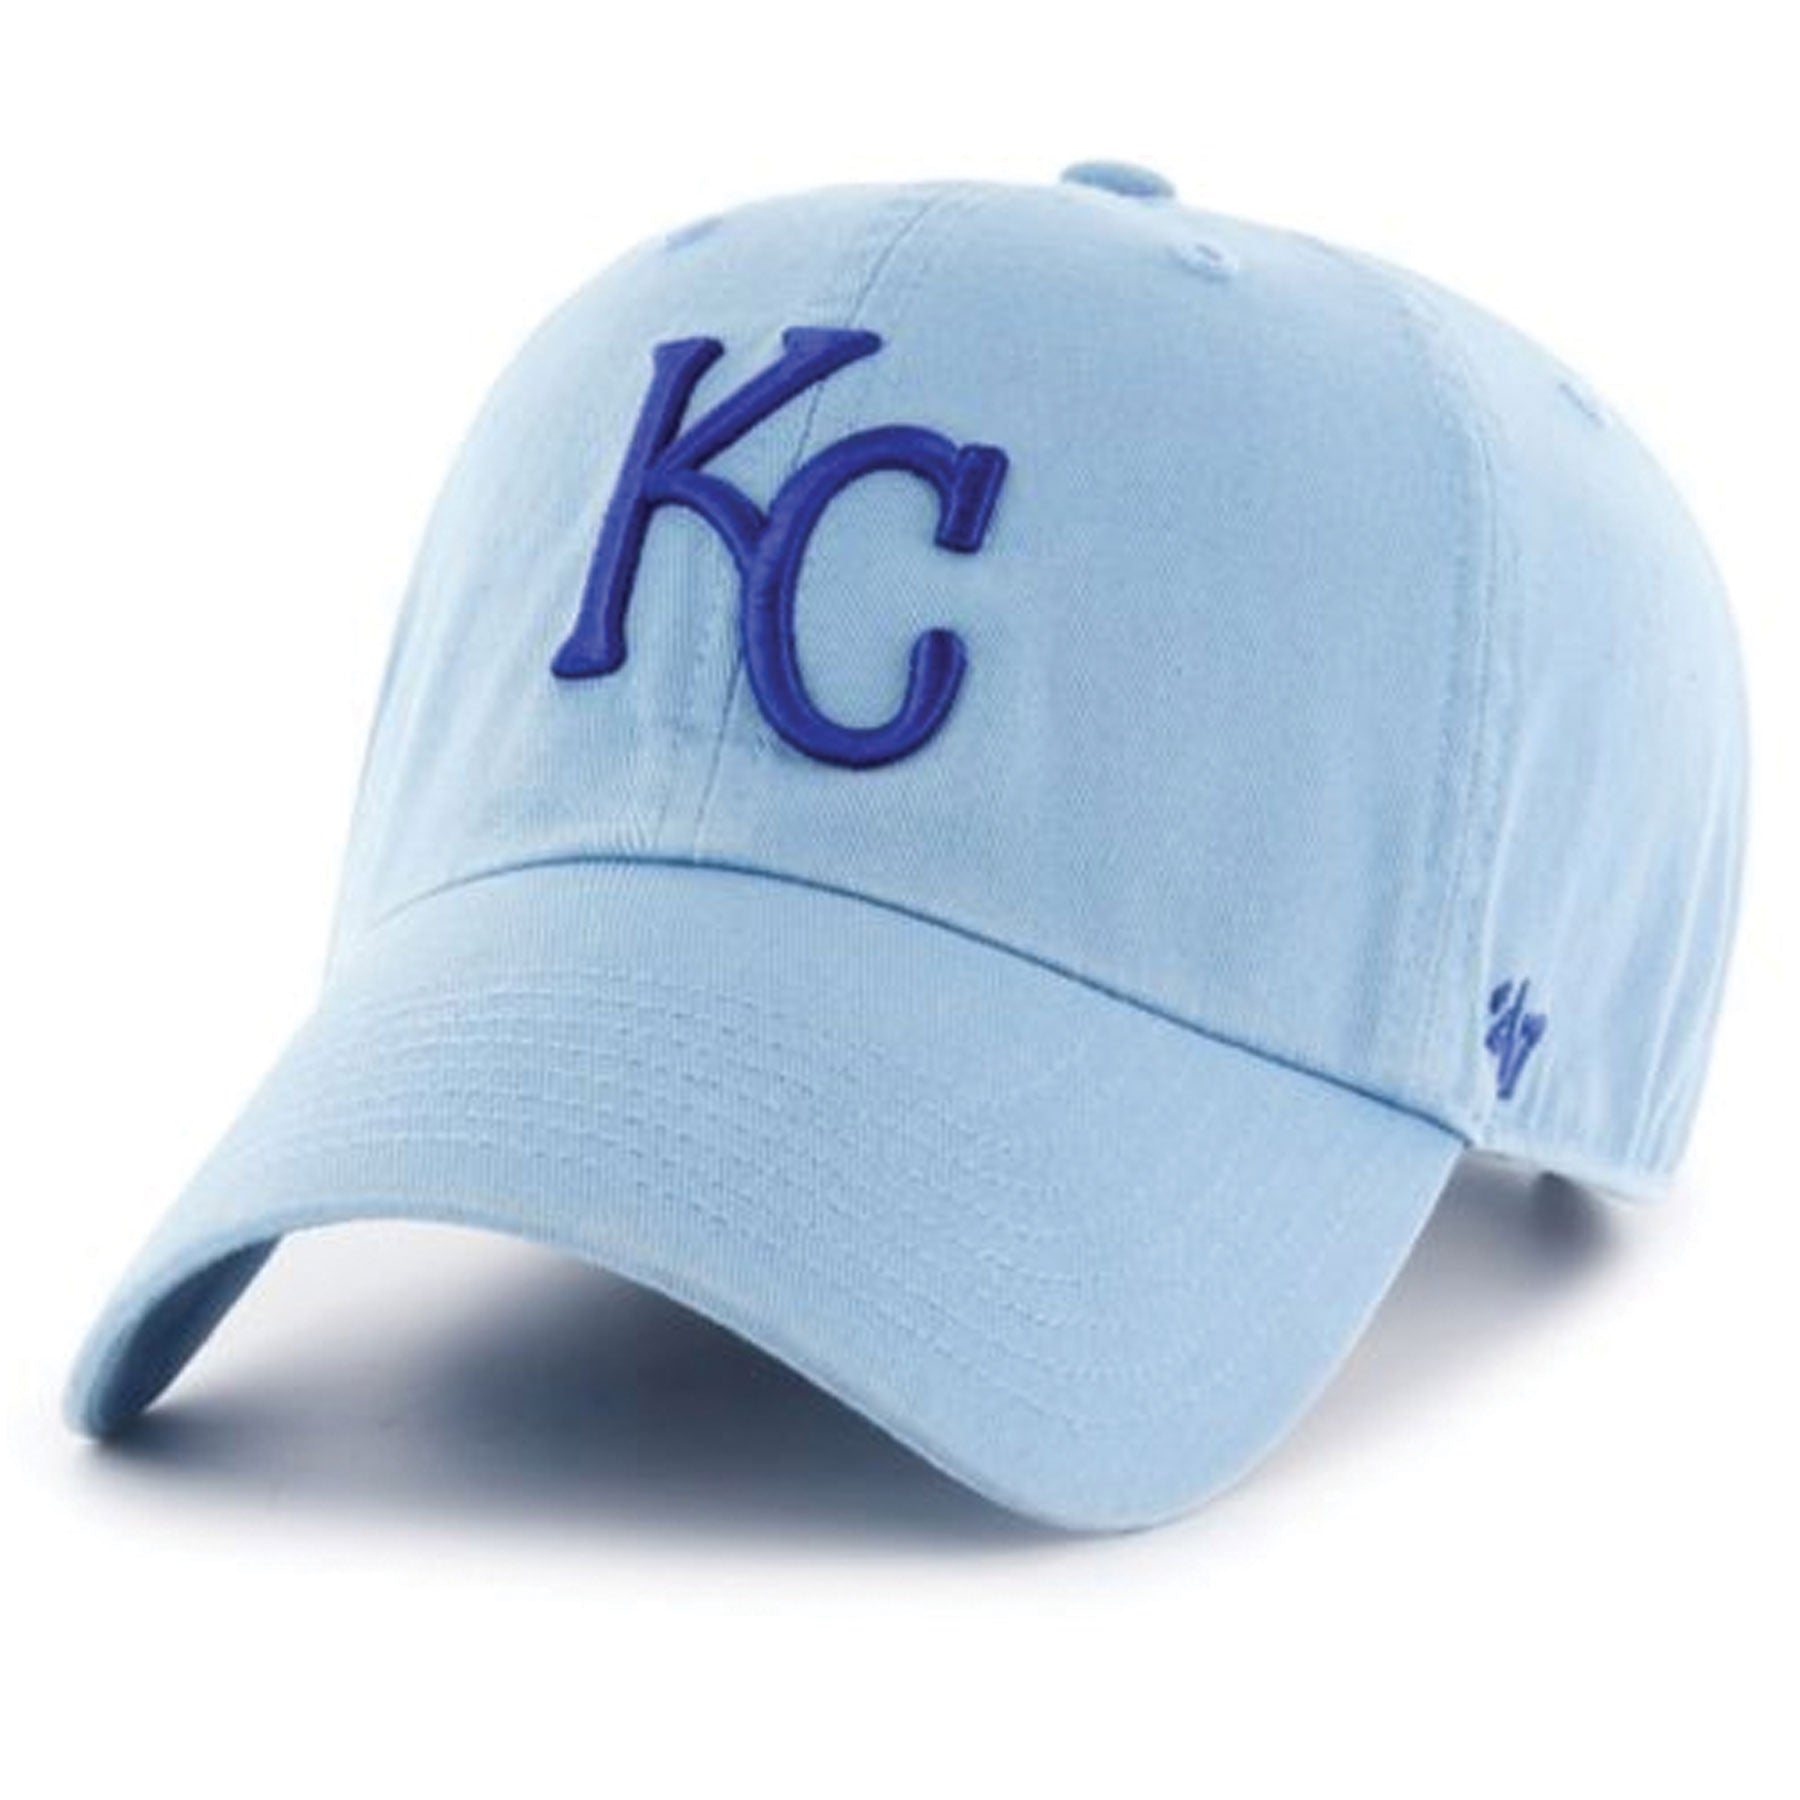 Kansas City Royals Light Blue Adjustable Baseball Cap Cap Swag